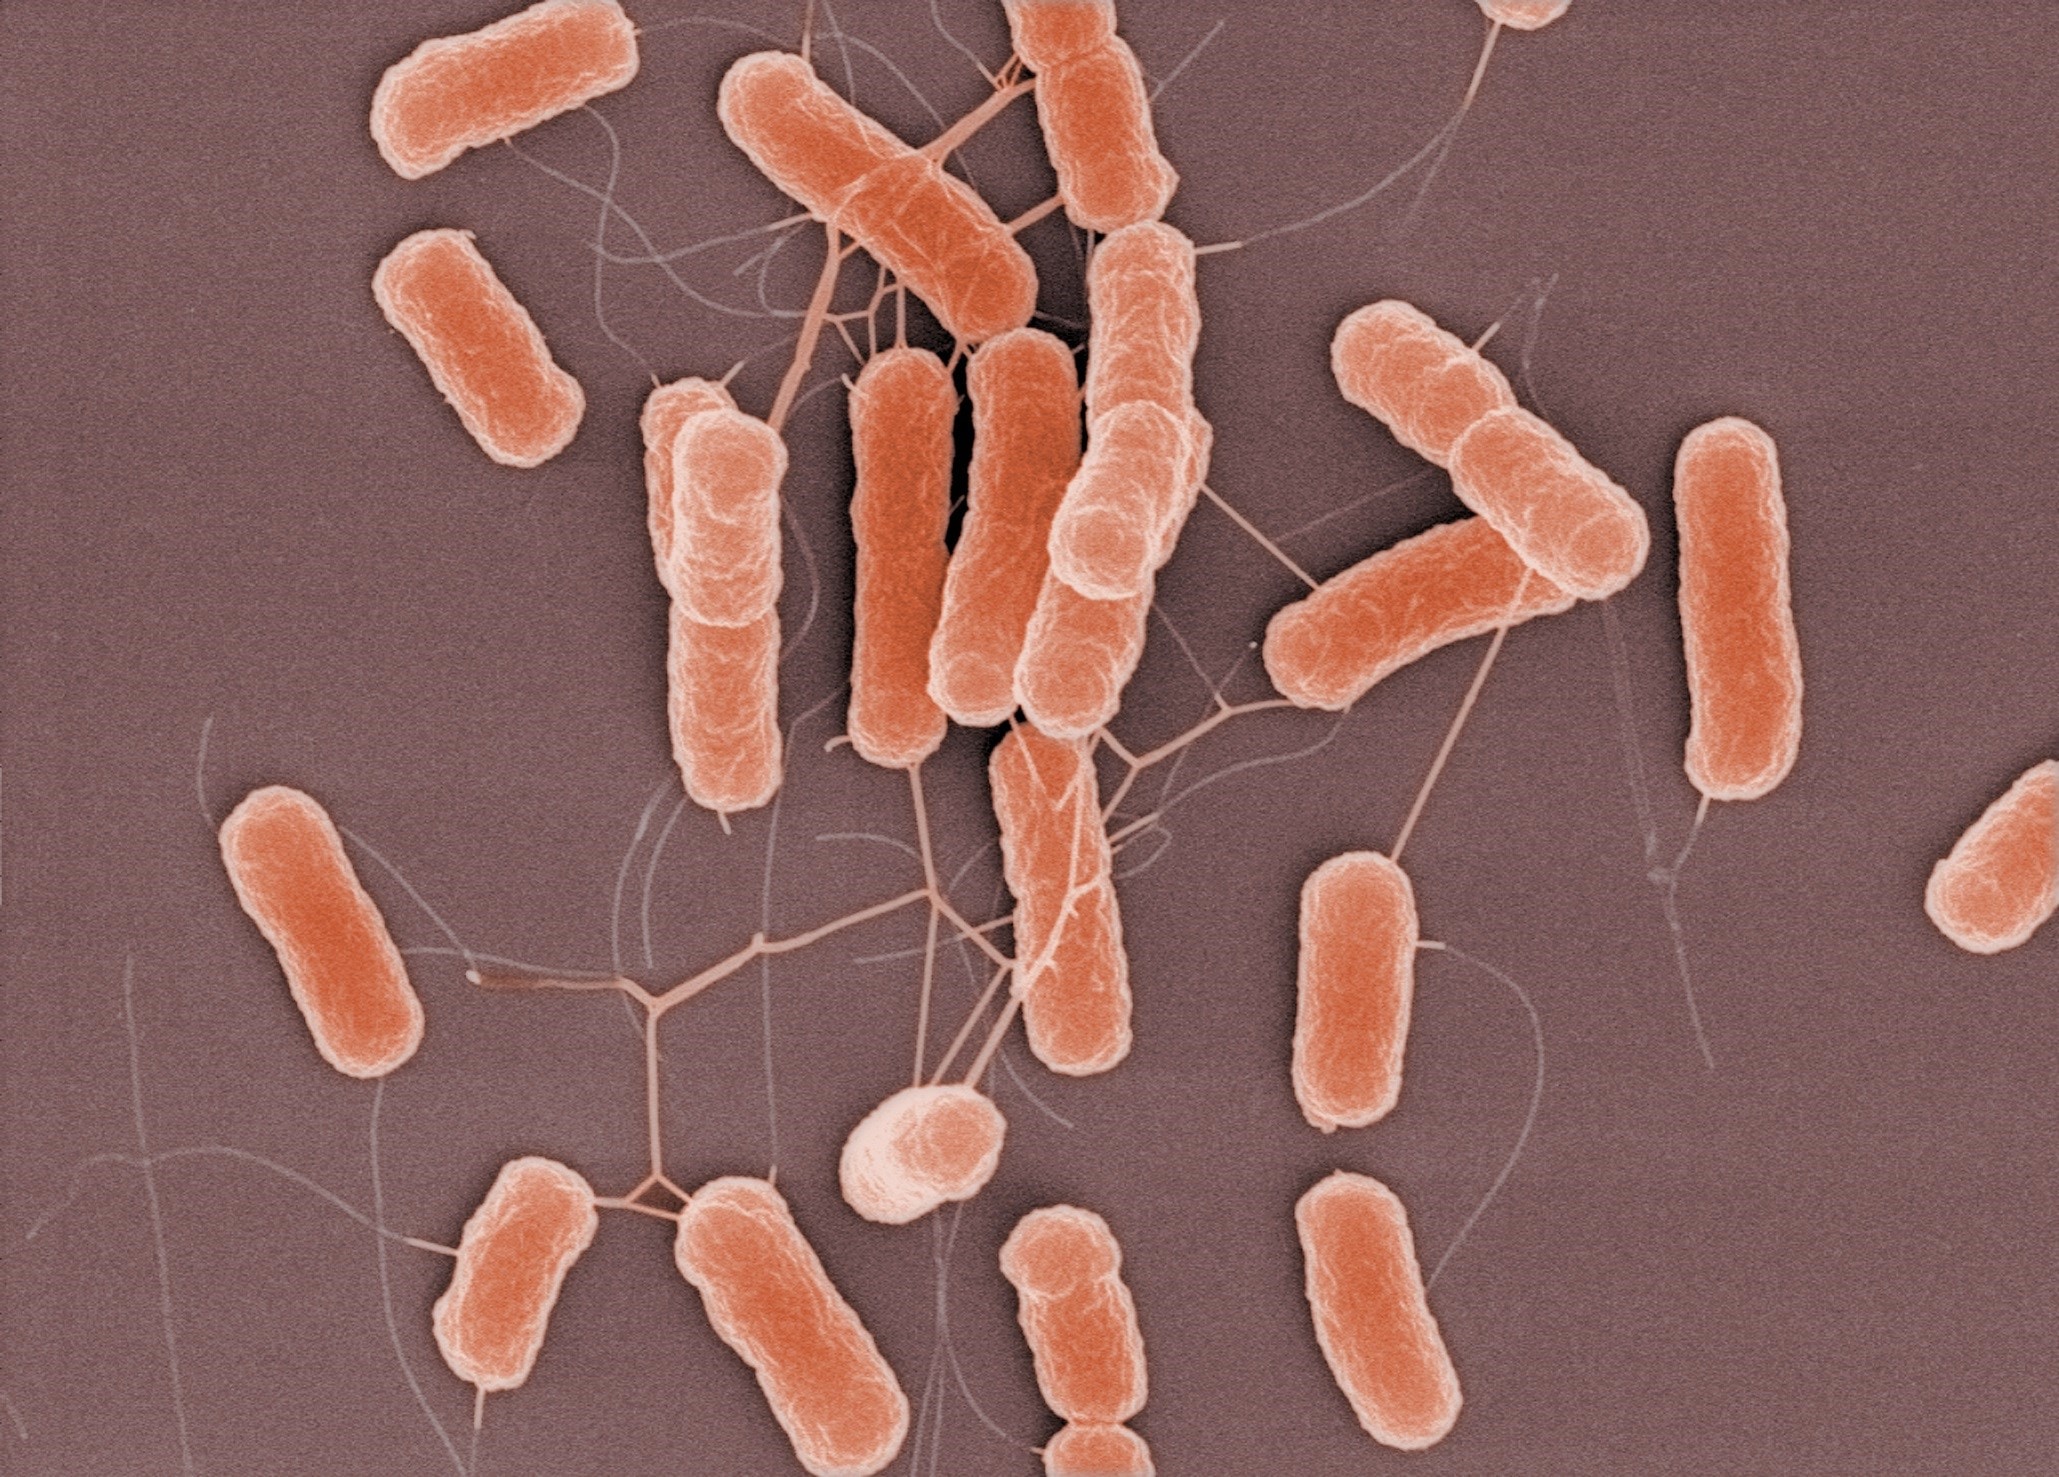 Photograph of E. coli